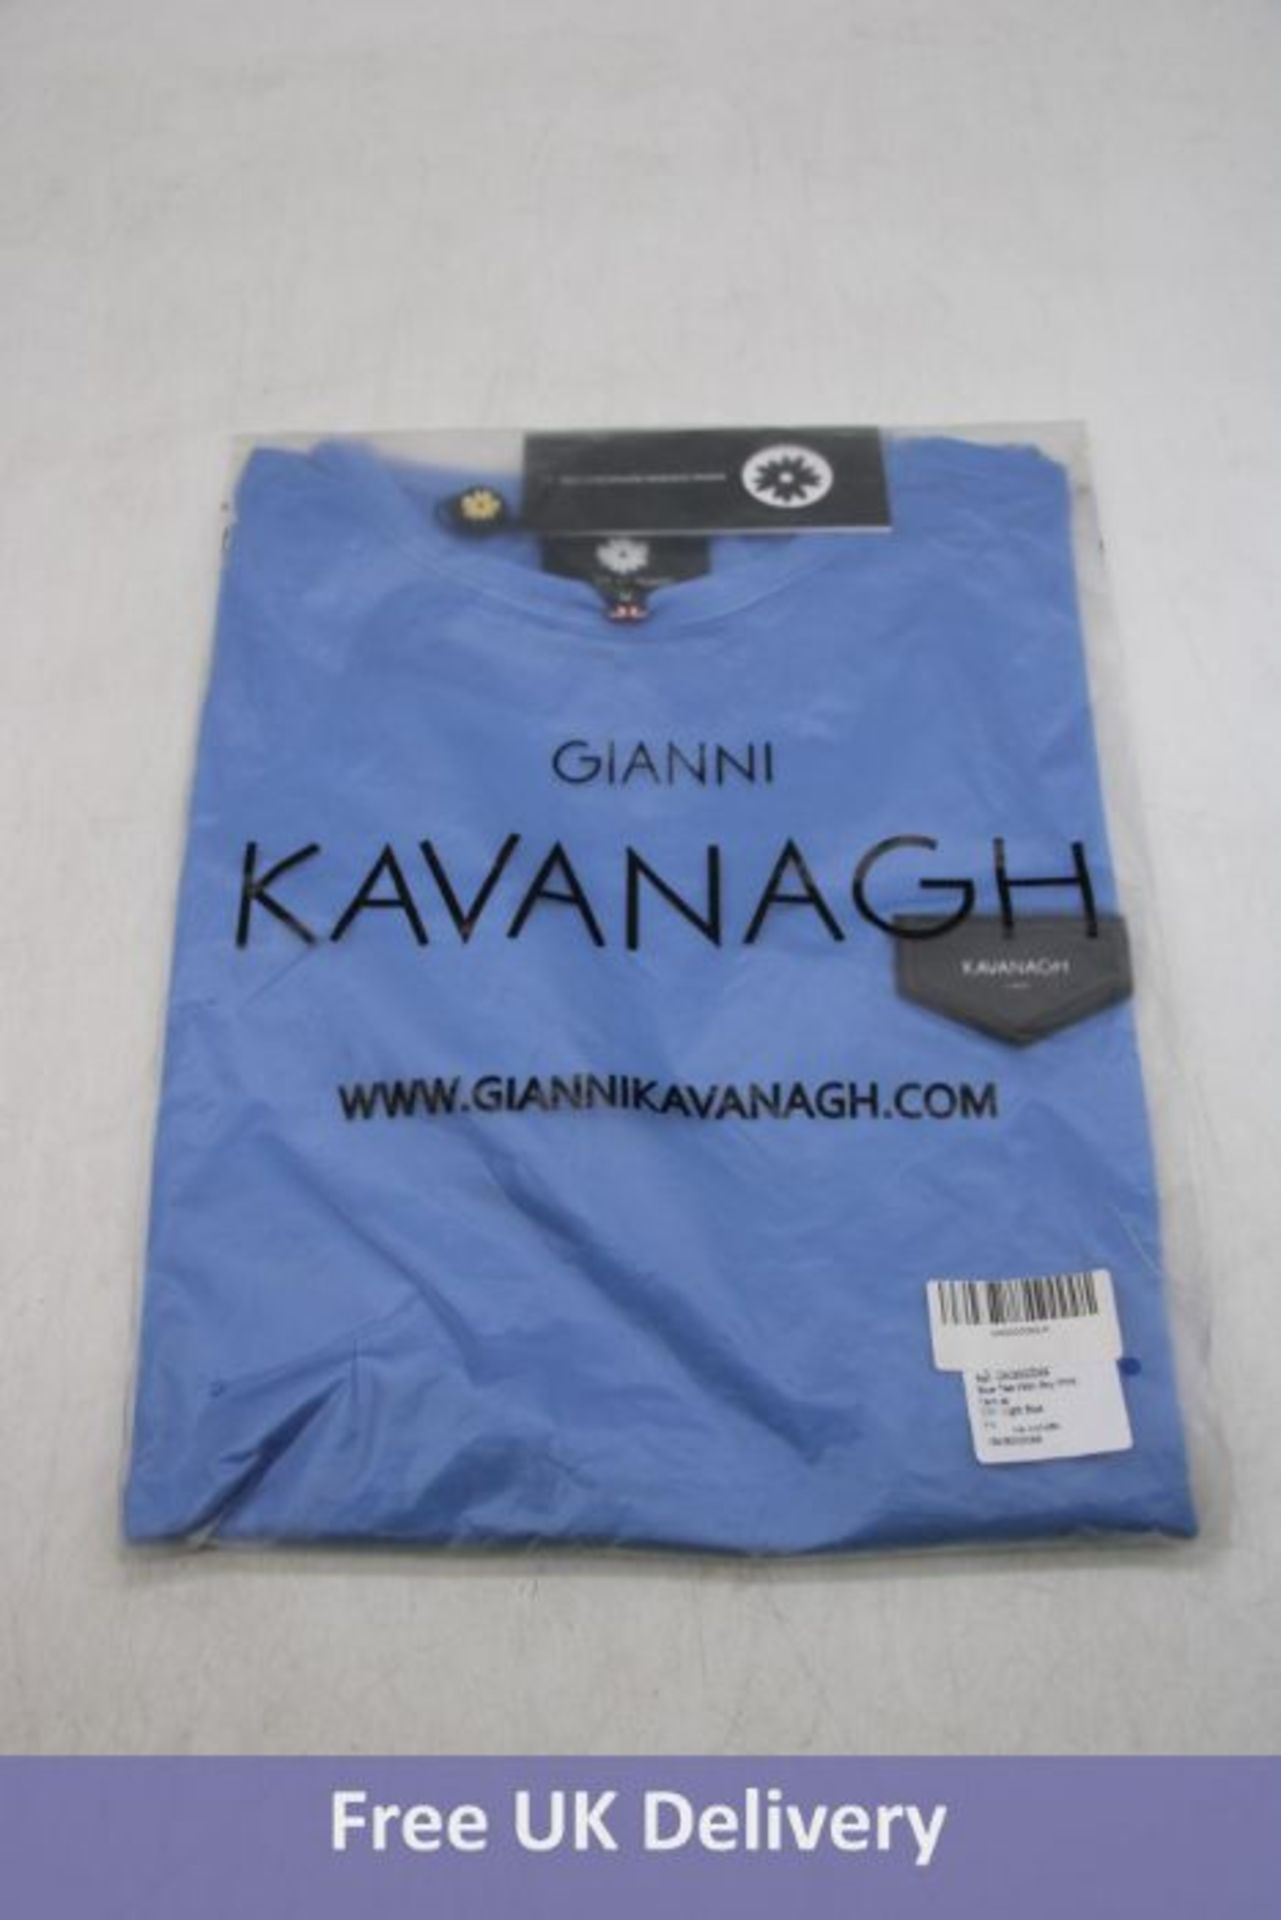 Two Gianni Kavanagh Men's Sky Print Tees, Light Blue, Medium